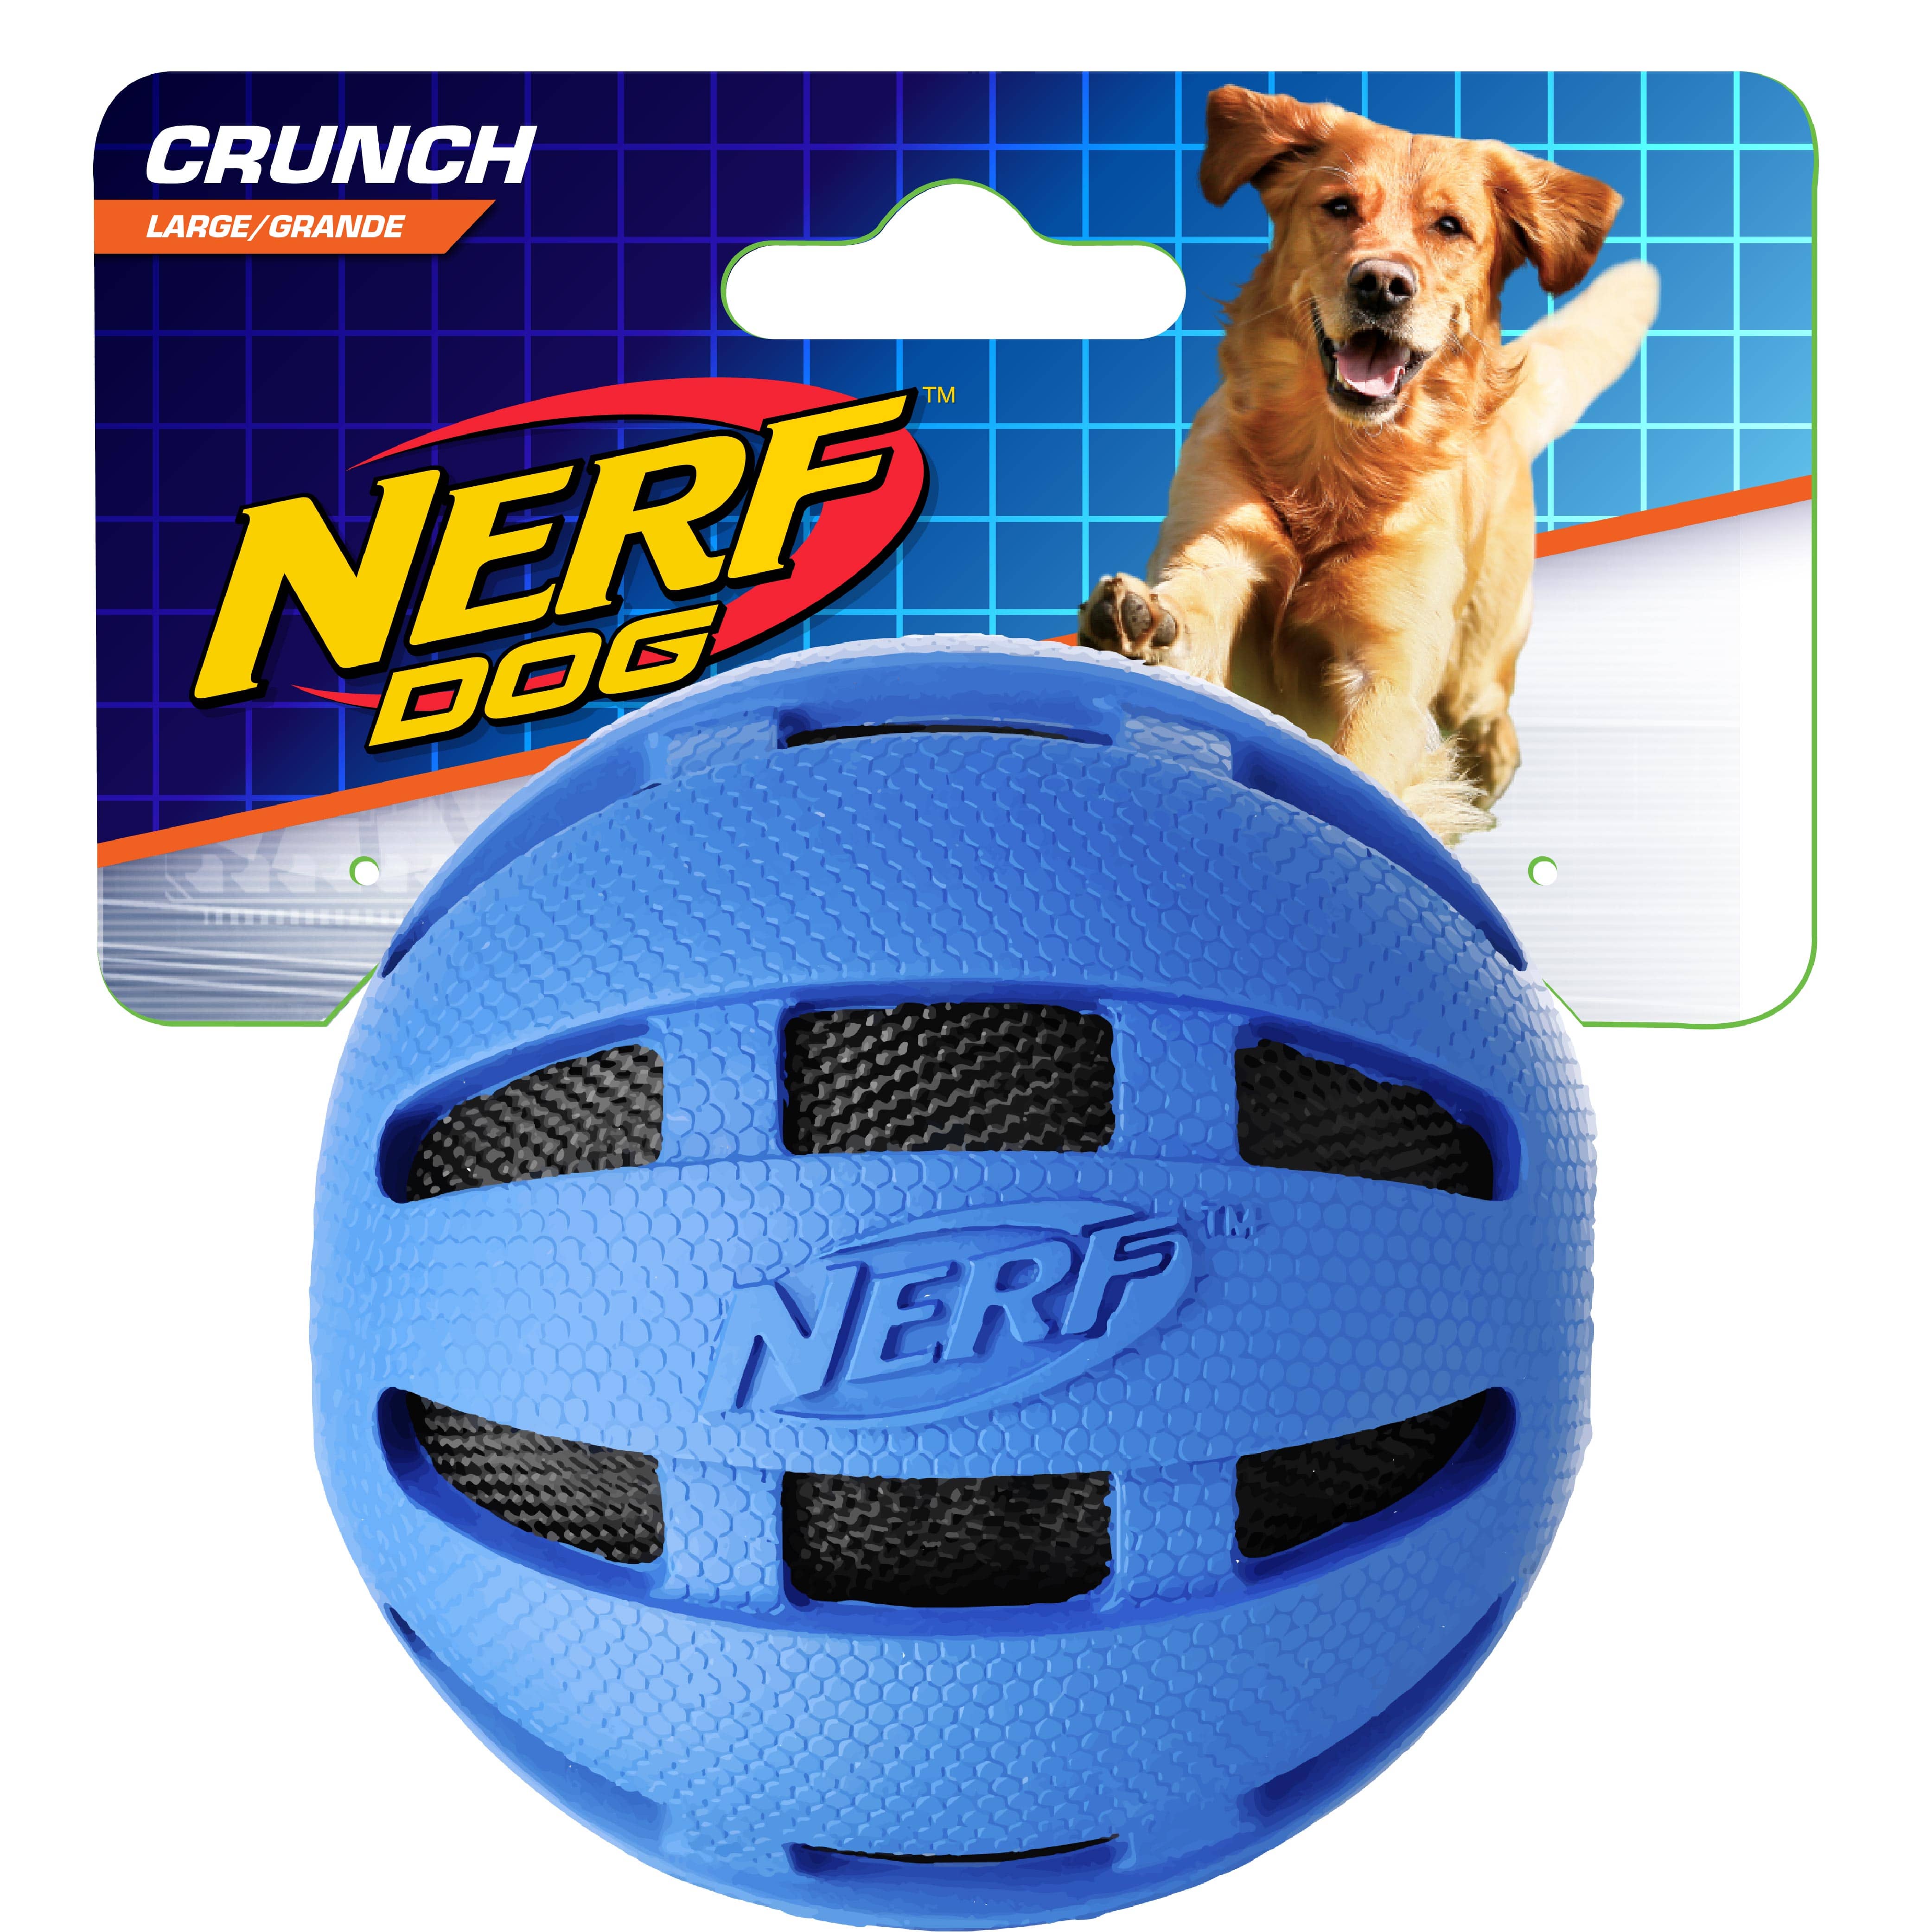 Nerf Dog Crunchable Rubber Ball